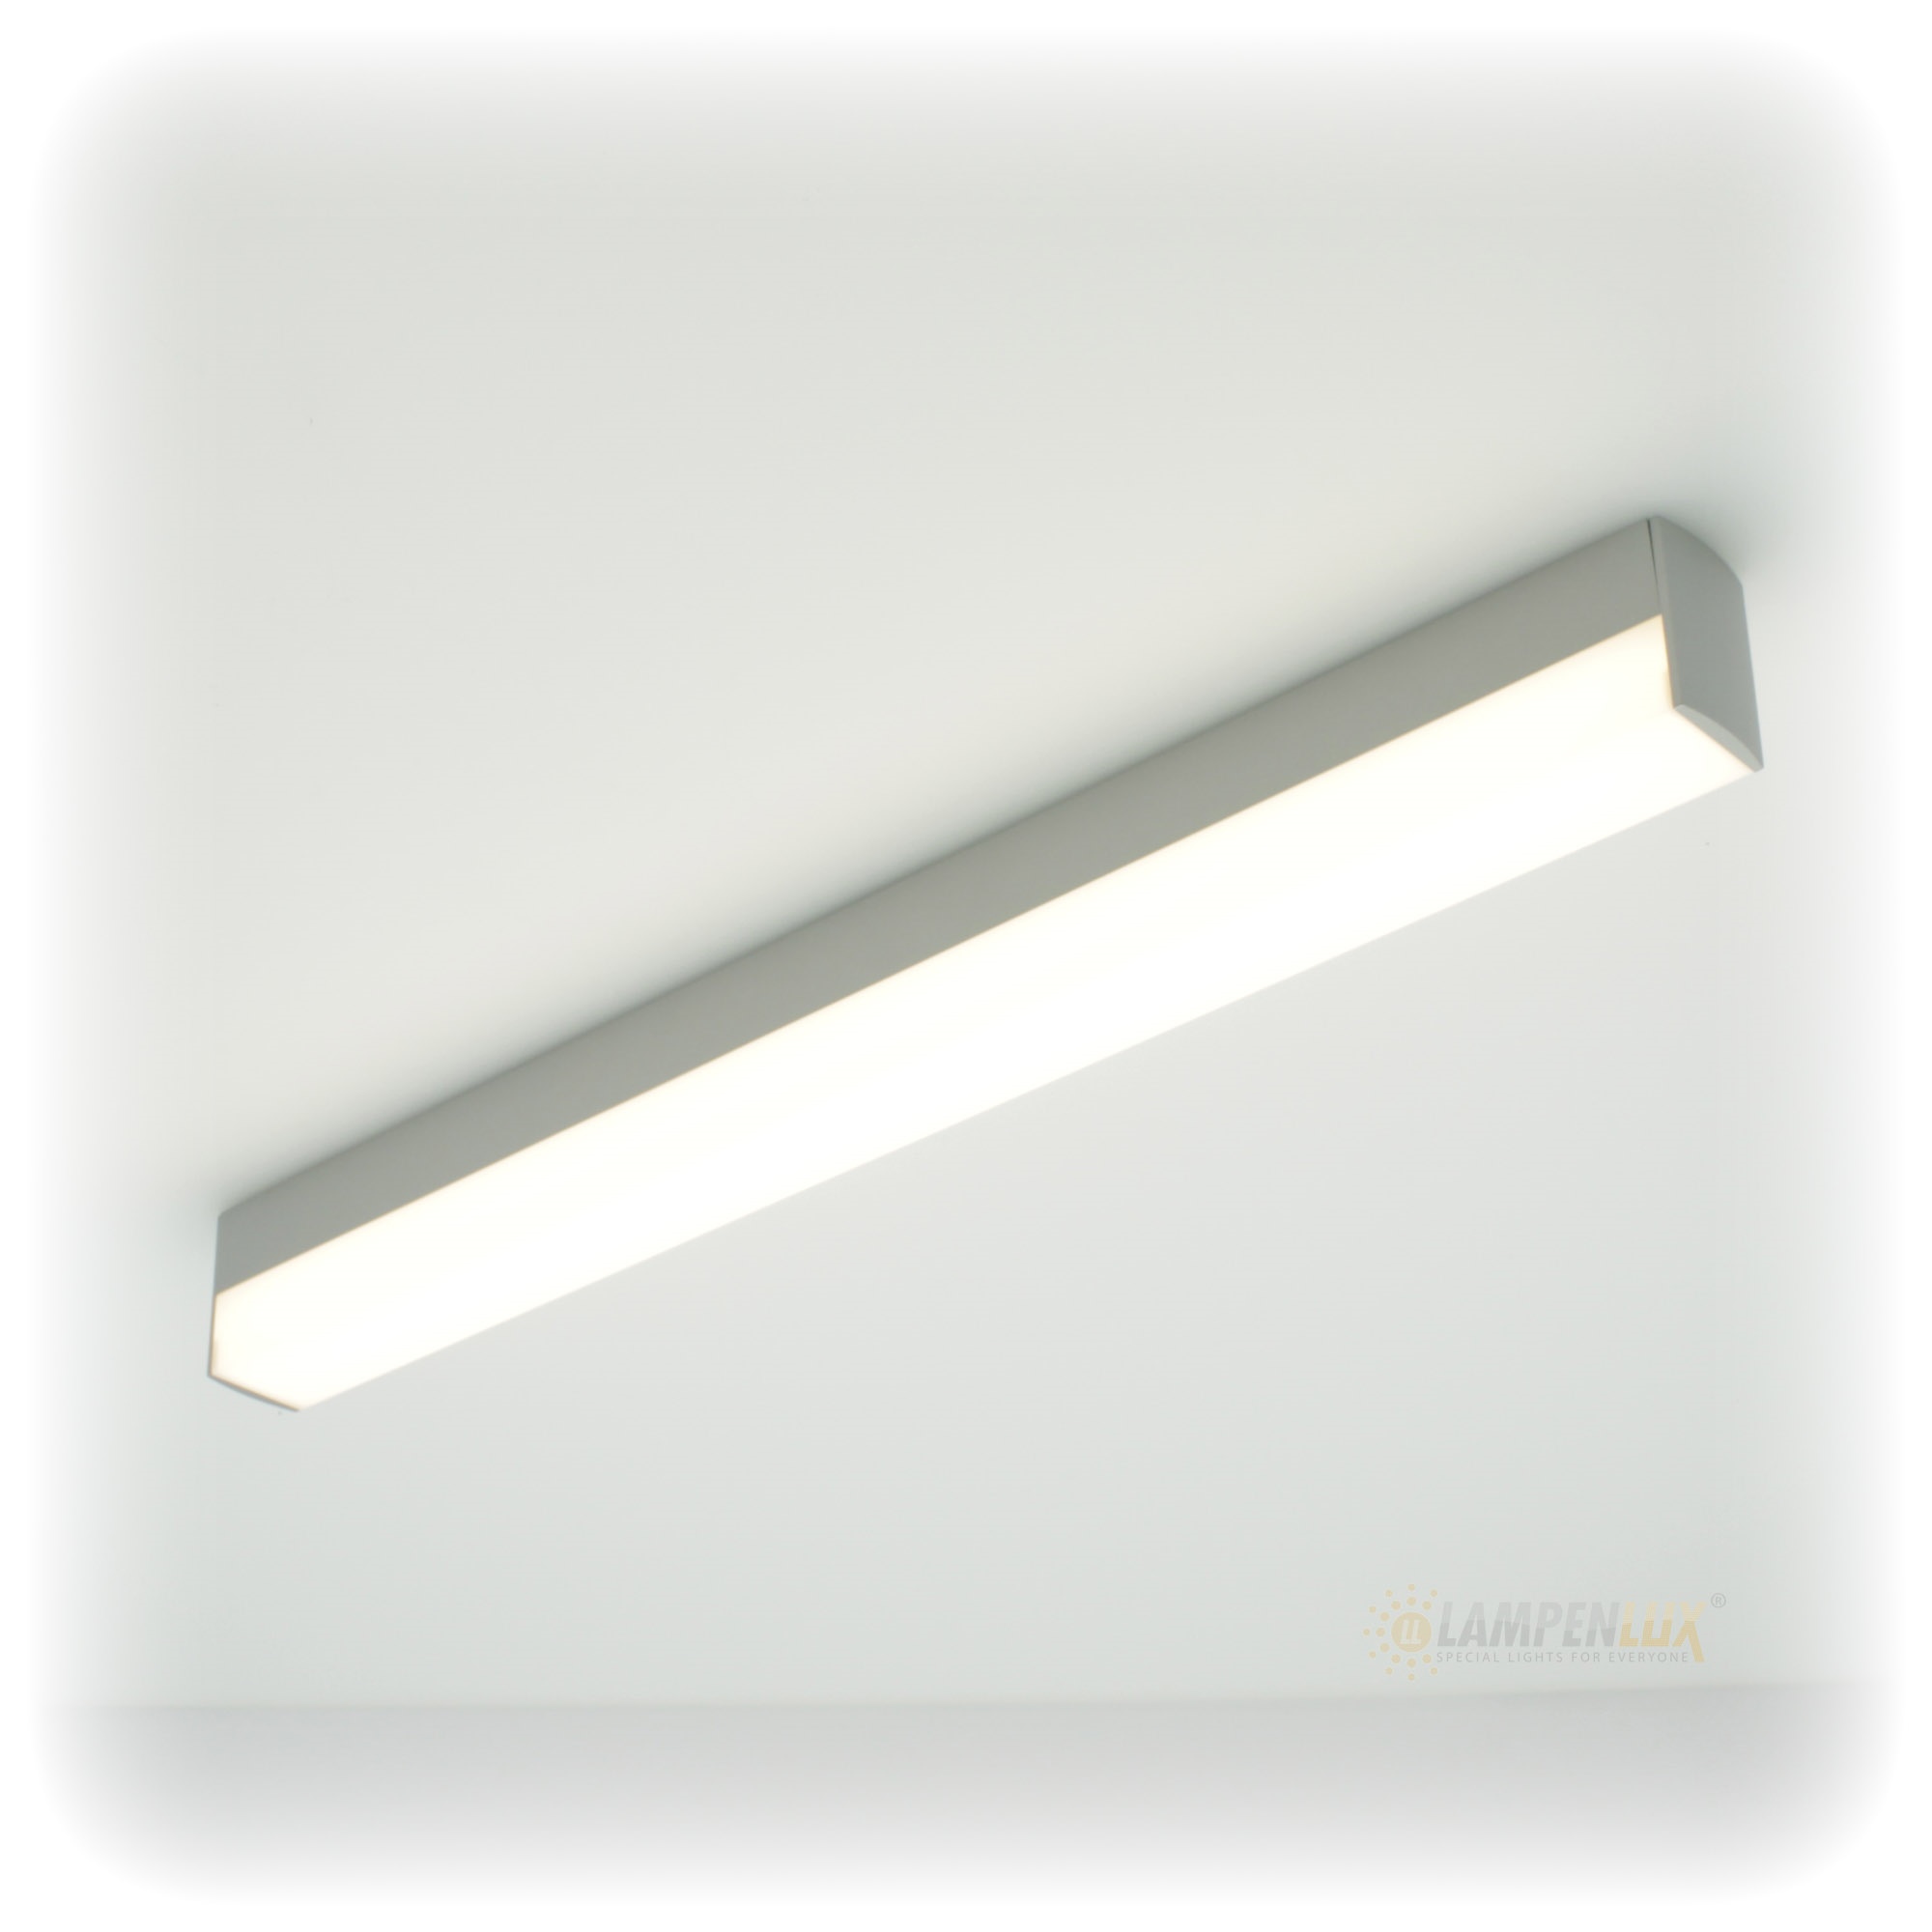 Lampenlux LED Wandlampe Wandleuchte Aaron Badlicht grau 20W 90cm inkl. LM